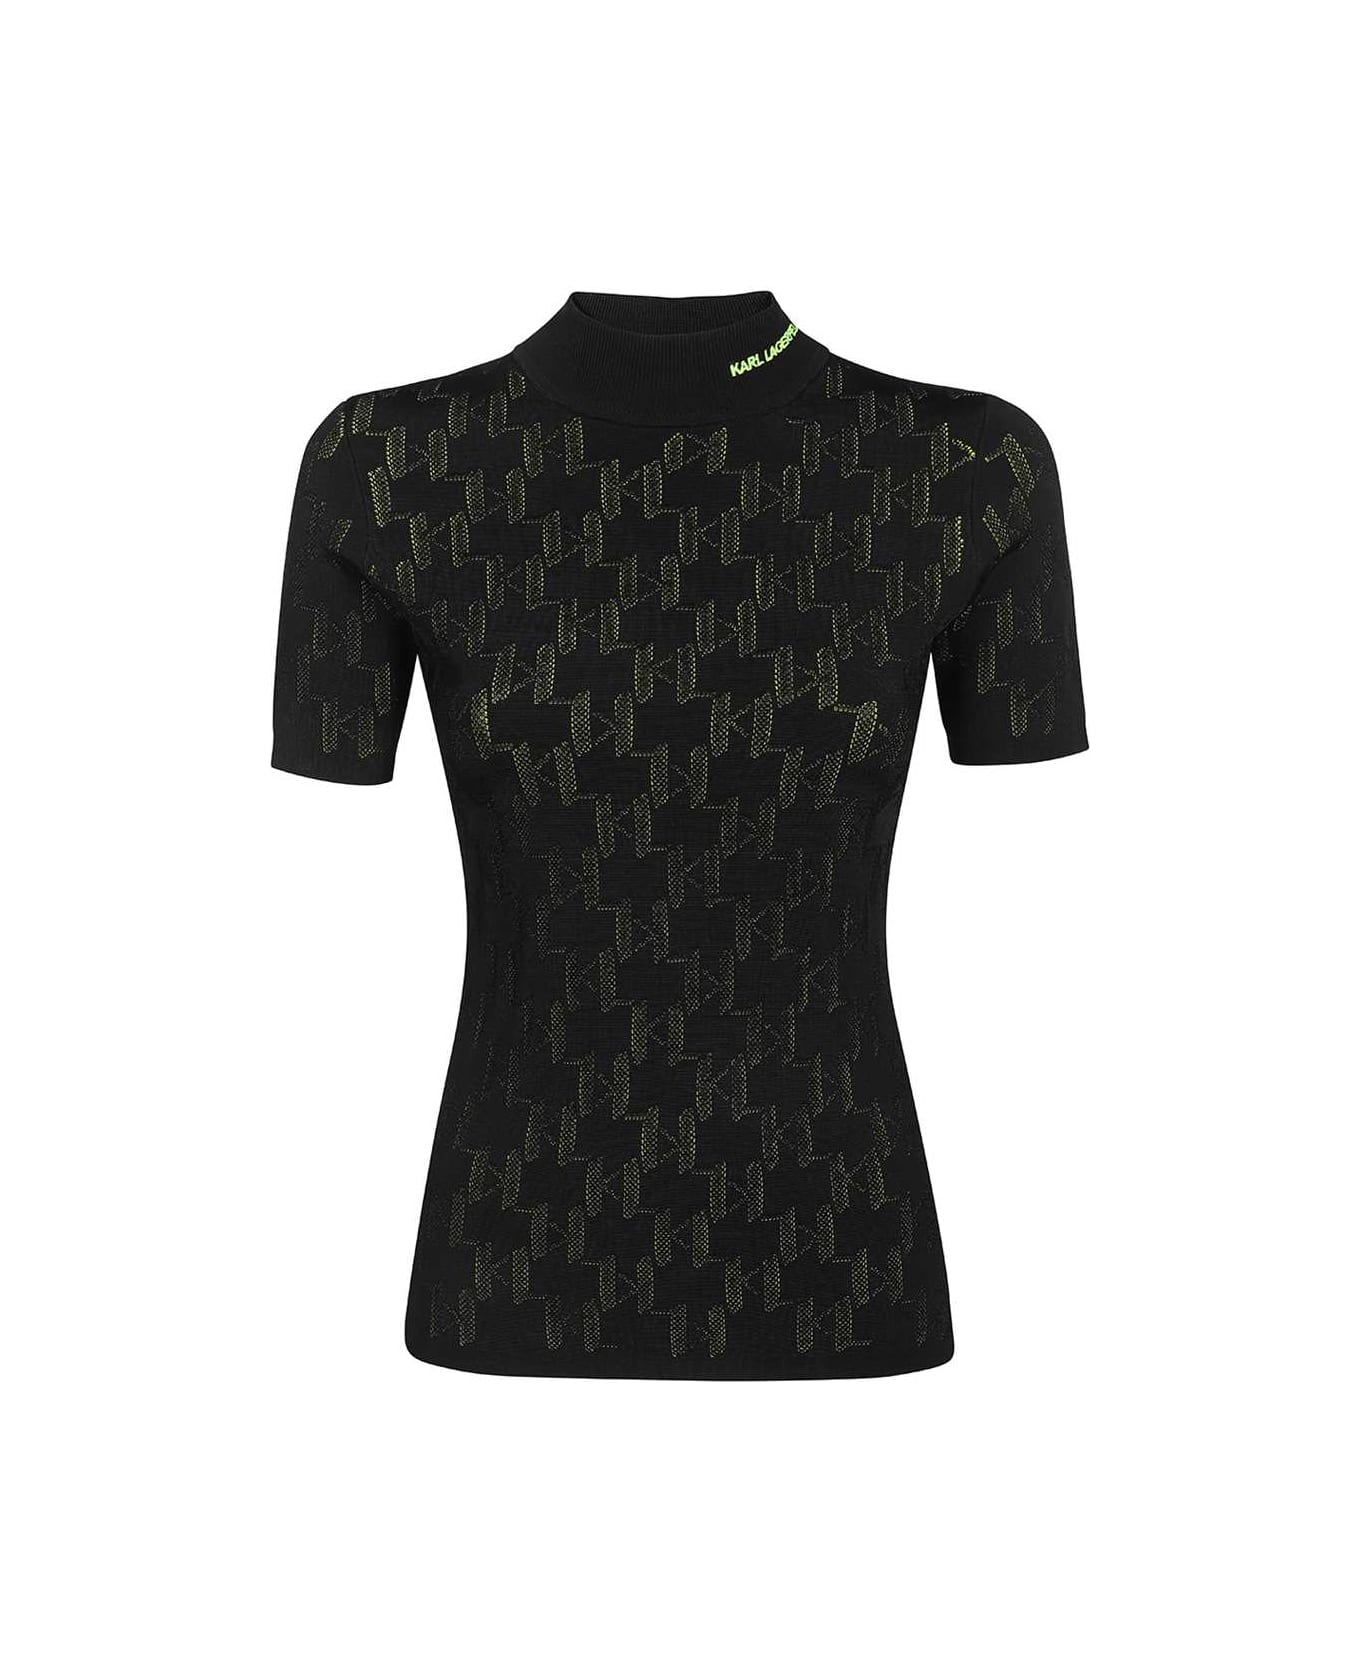 Karl Lagerfeld Short Sleeve Top - black ポロシャツ